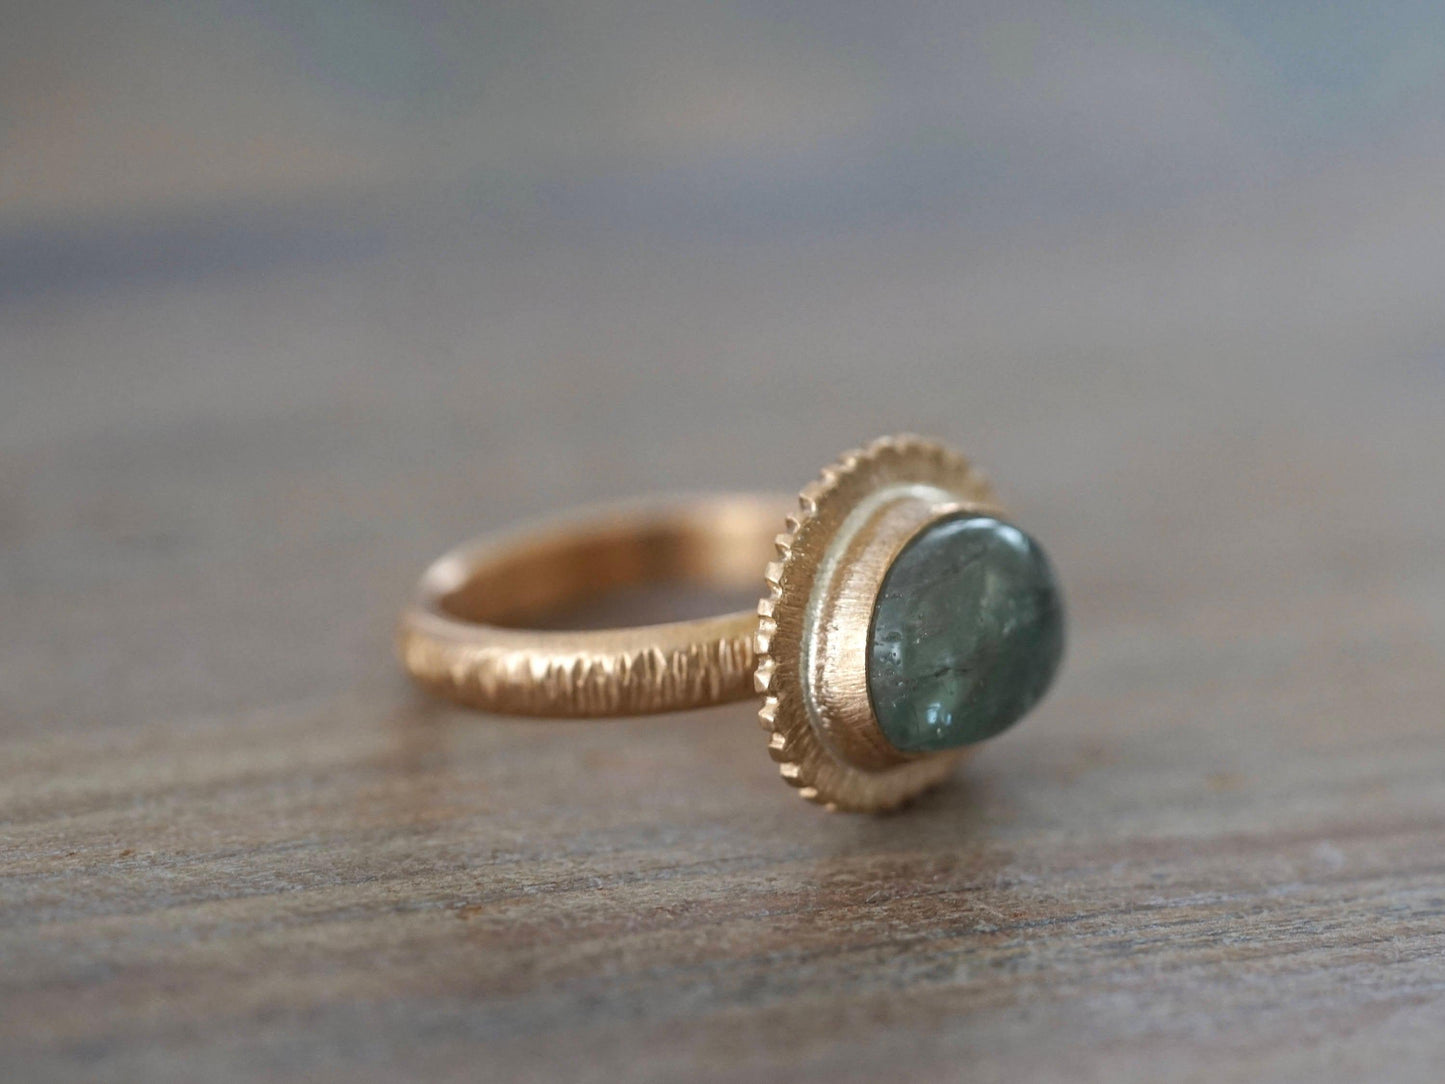 Bronze and aqua green tourmaline ring, size 6.5